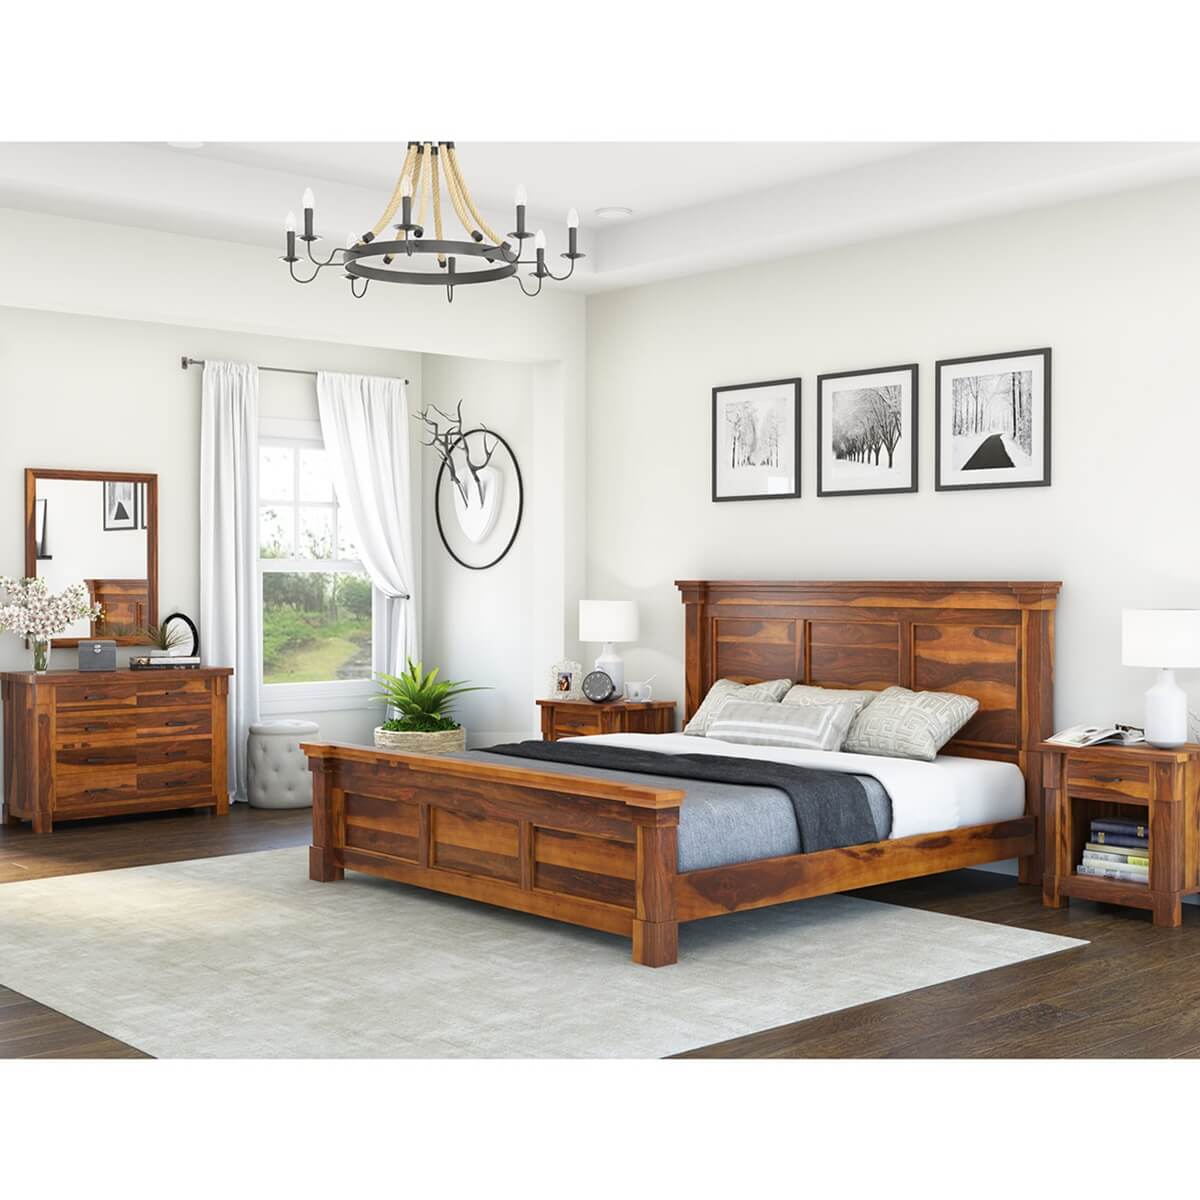 https://www.sierralivingconcepts.com/images/thumbs/0394179_modern-farmhouse-solid-wood-4-piece-bedroom-set.jpeg